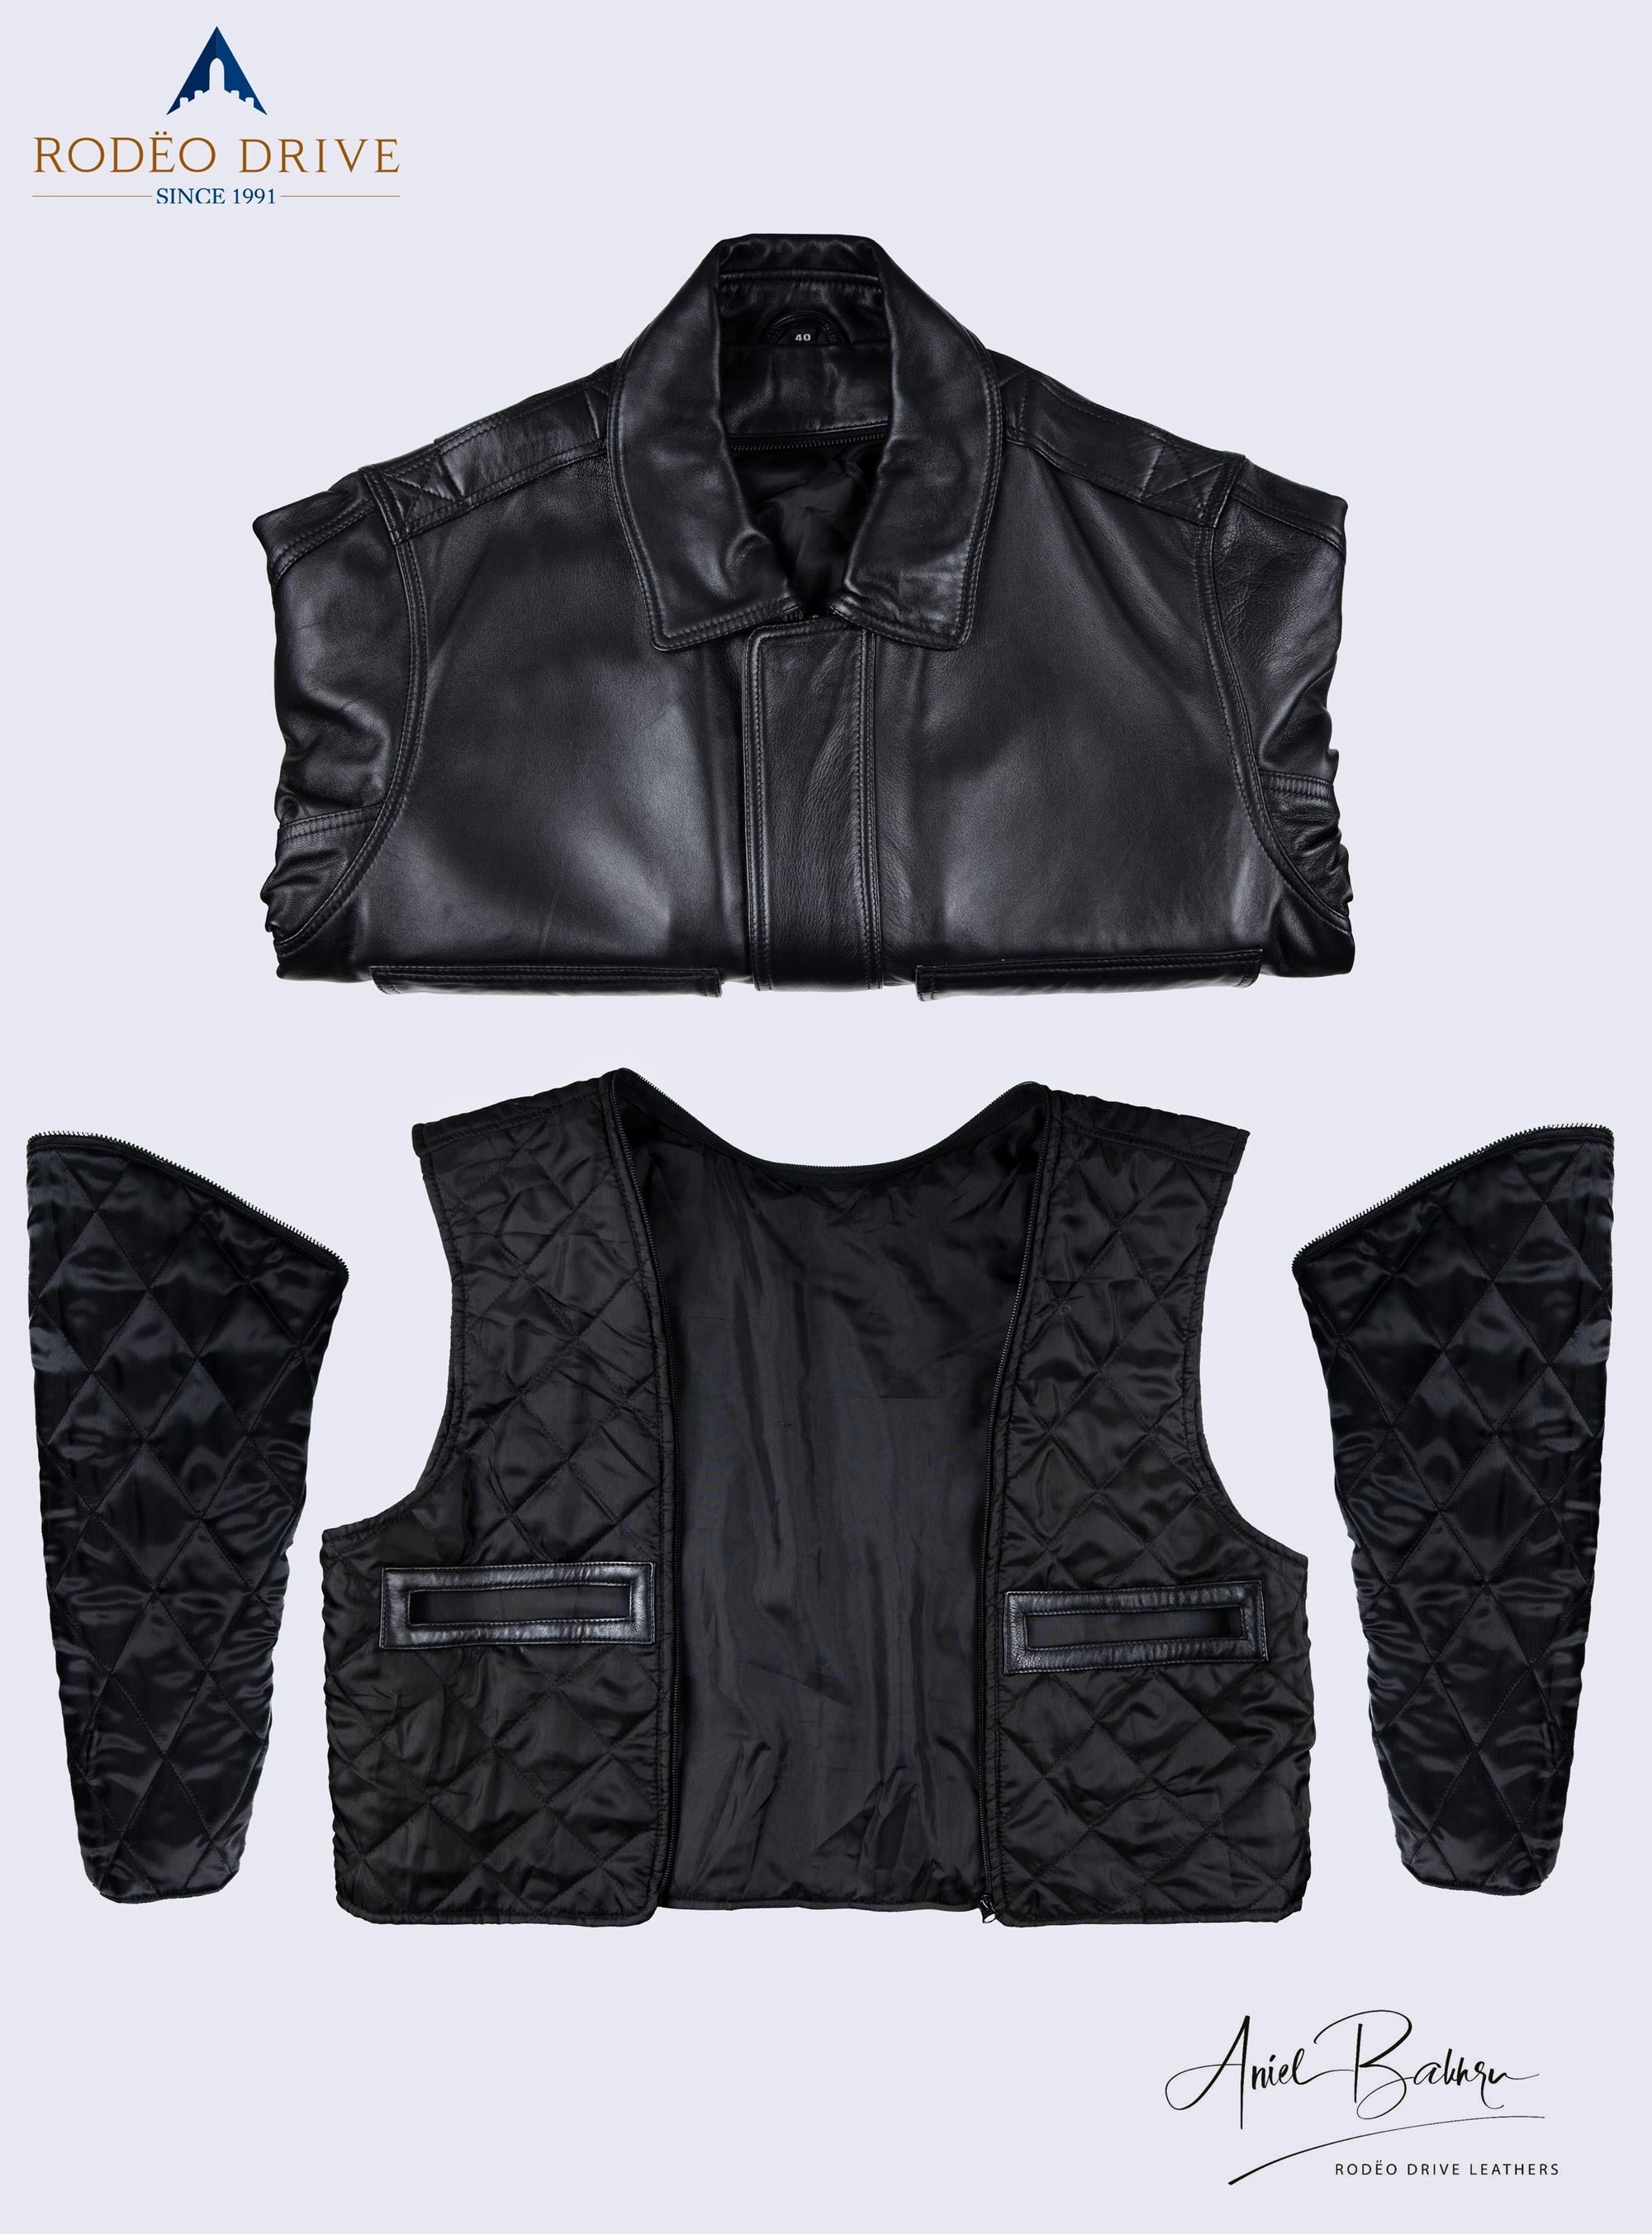 Inner lining look of Alaska leather Jacket for men